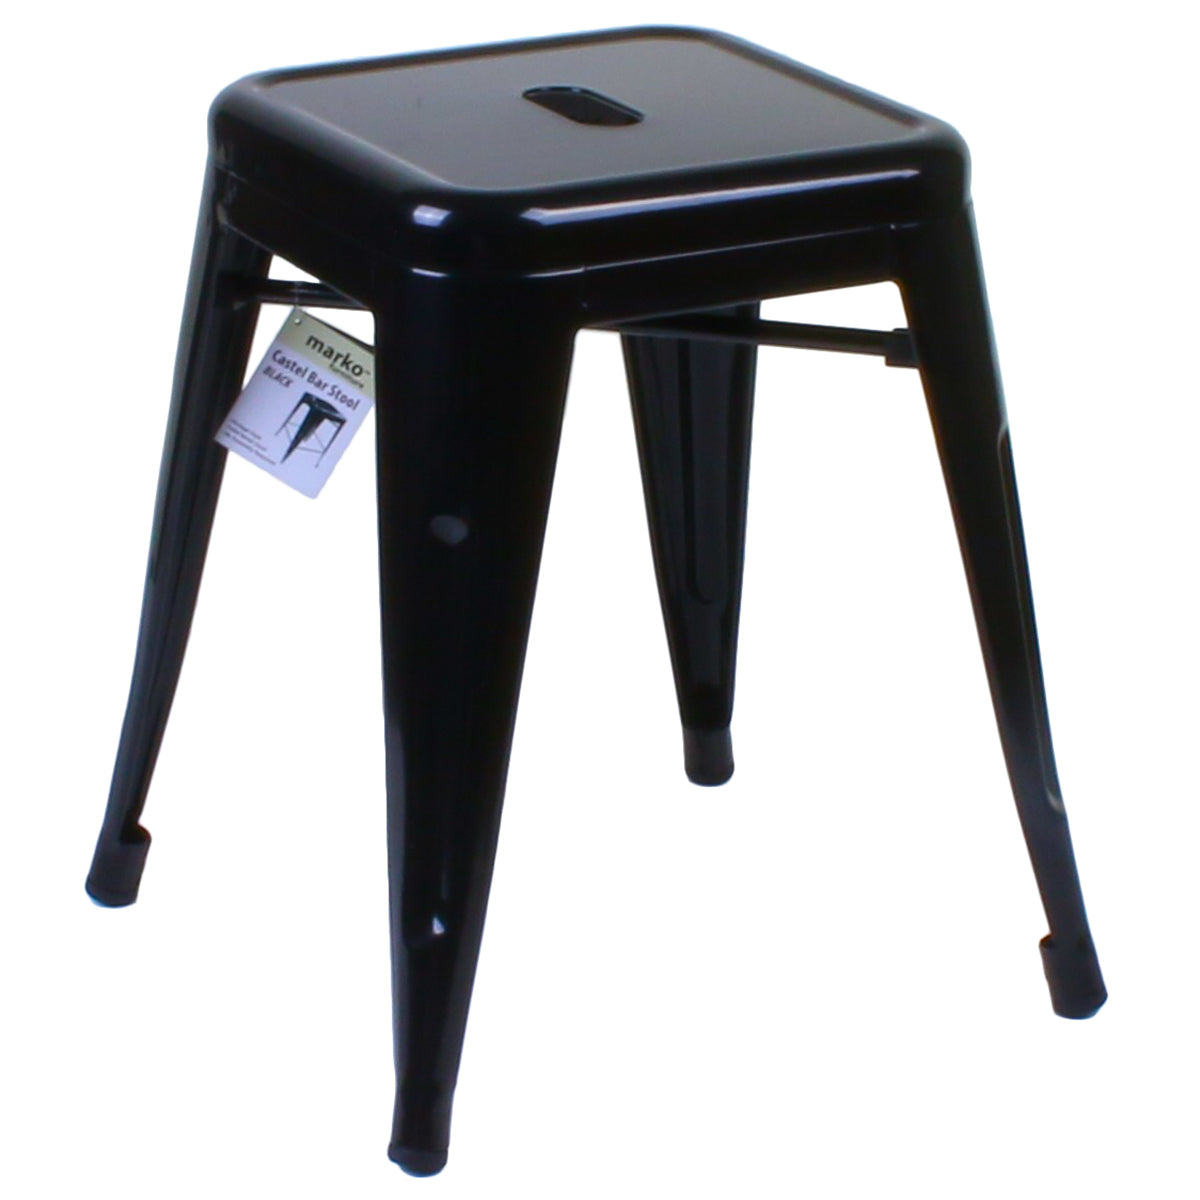 7PC Prato Table, 4 Siena Chairs & 2 Castel Stools Set - Black